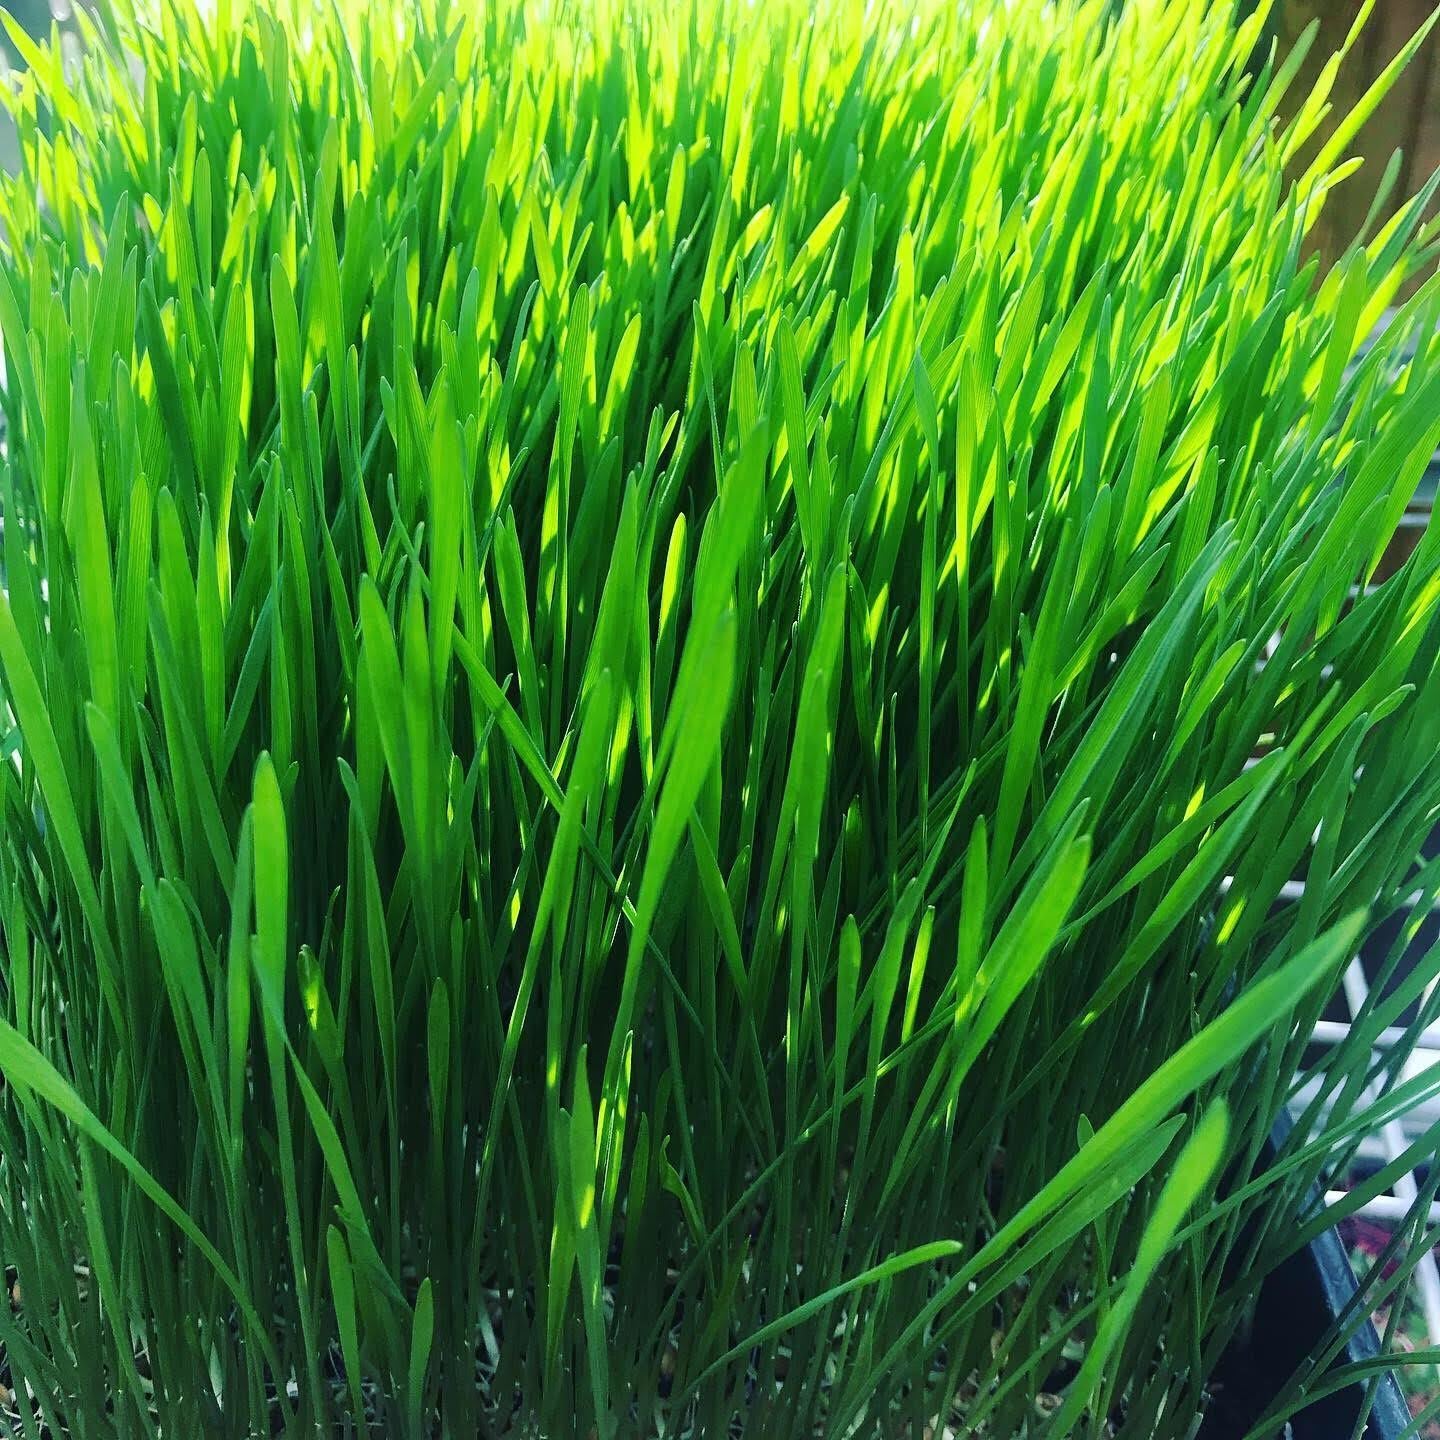 Wheatgrass/Catgrass